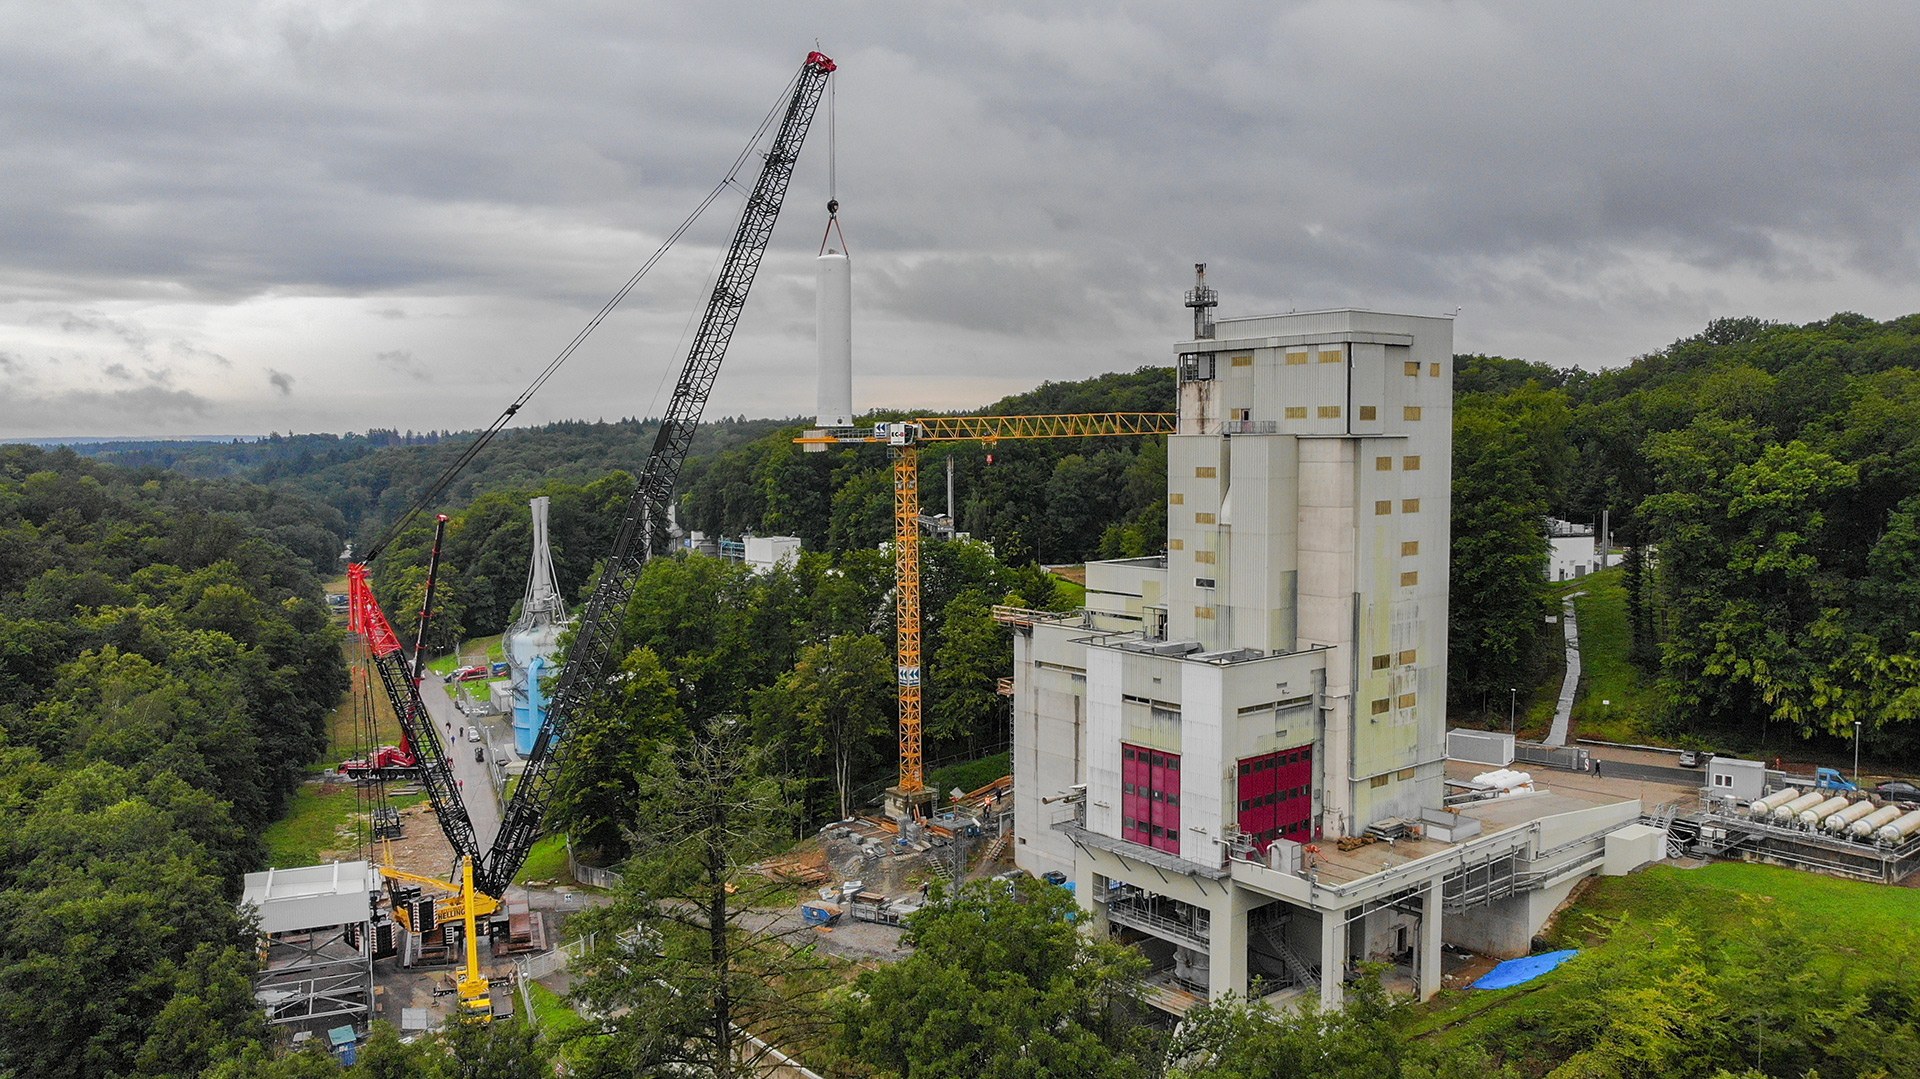 Methane tank hangs over DLR's Lampoldshausen site